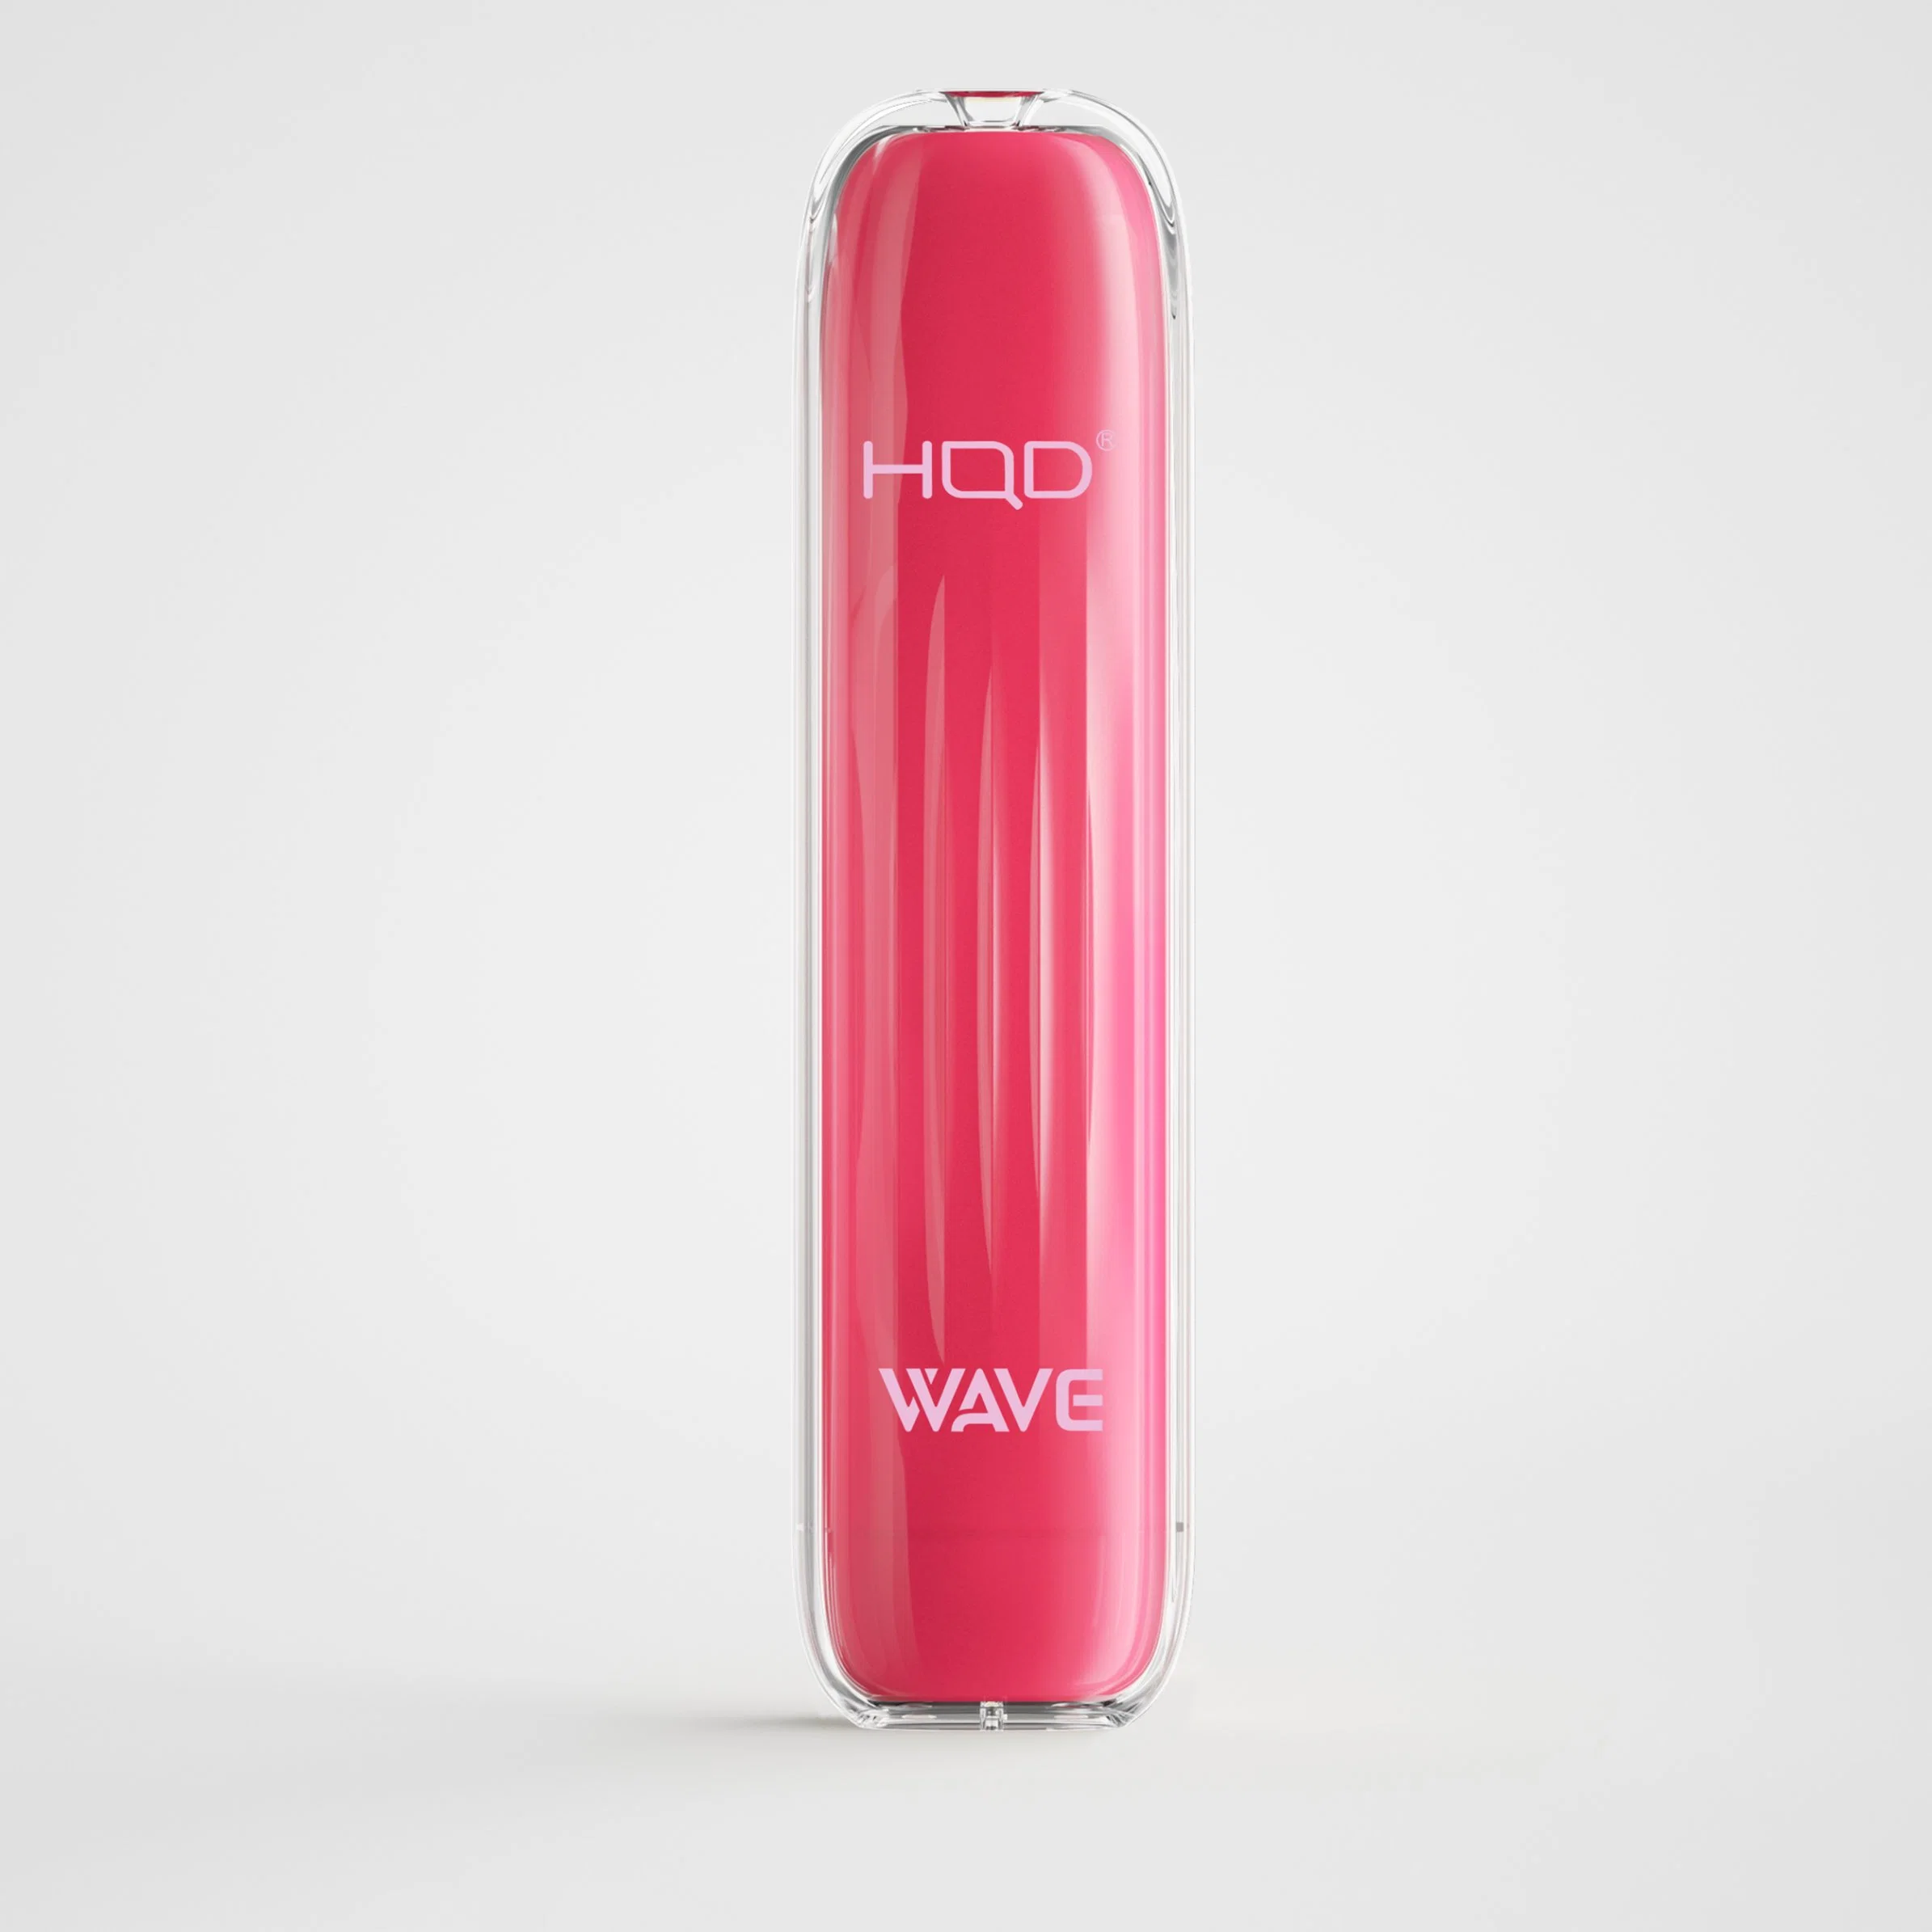 Hqd European Hot Sell 600 Puffs Tpd 500mAh Wave E-Cigarette Disposable Vape